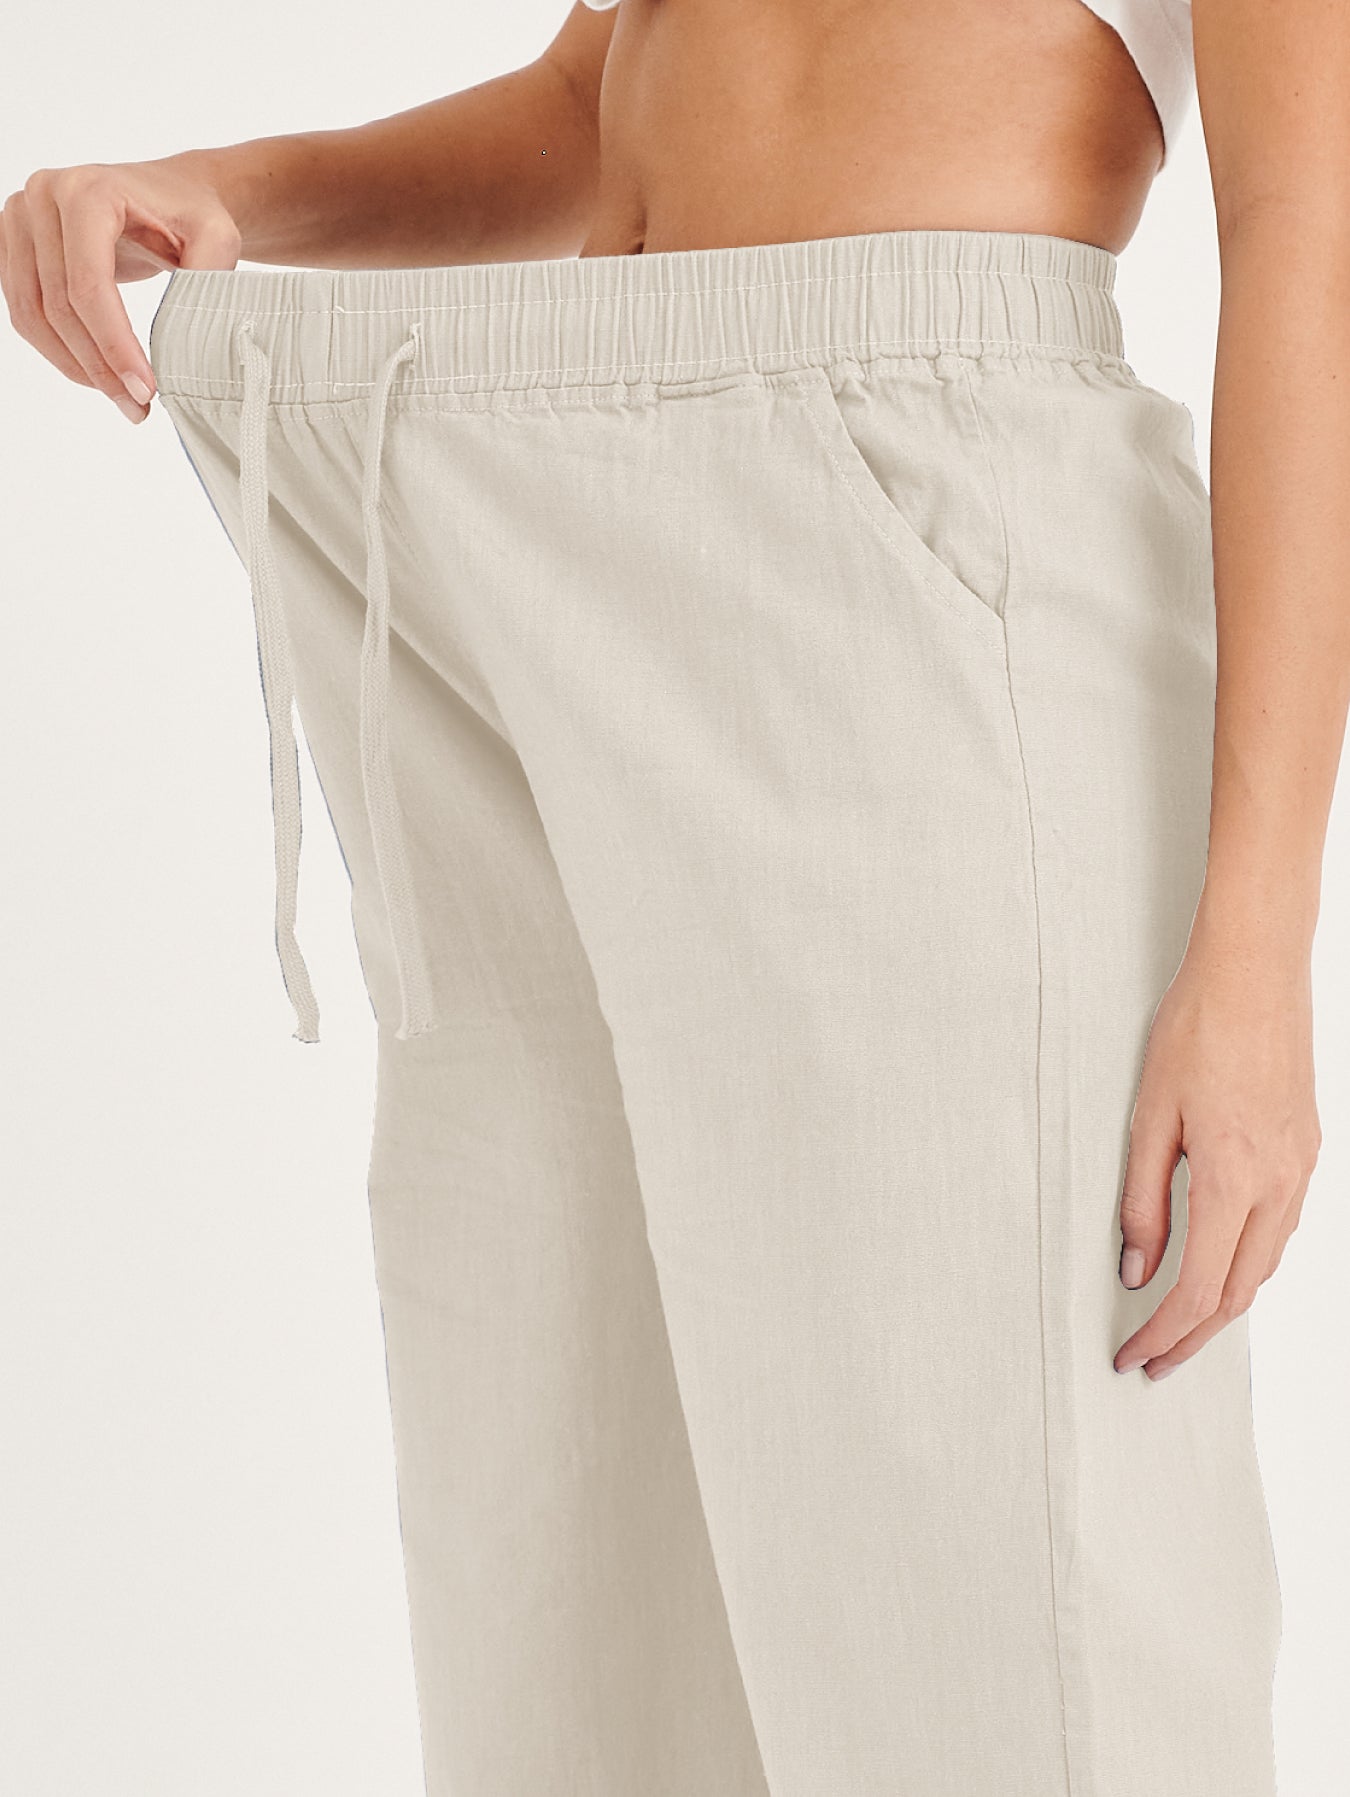 Casual linen pants for women